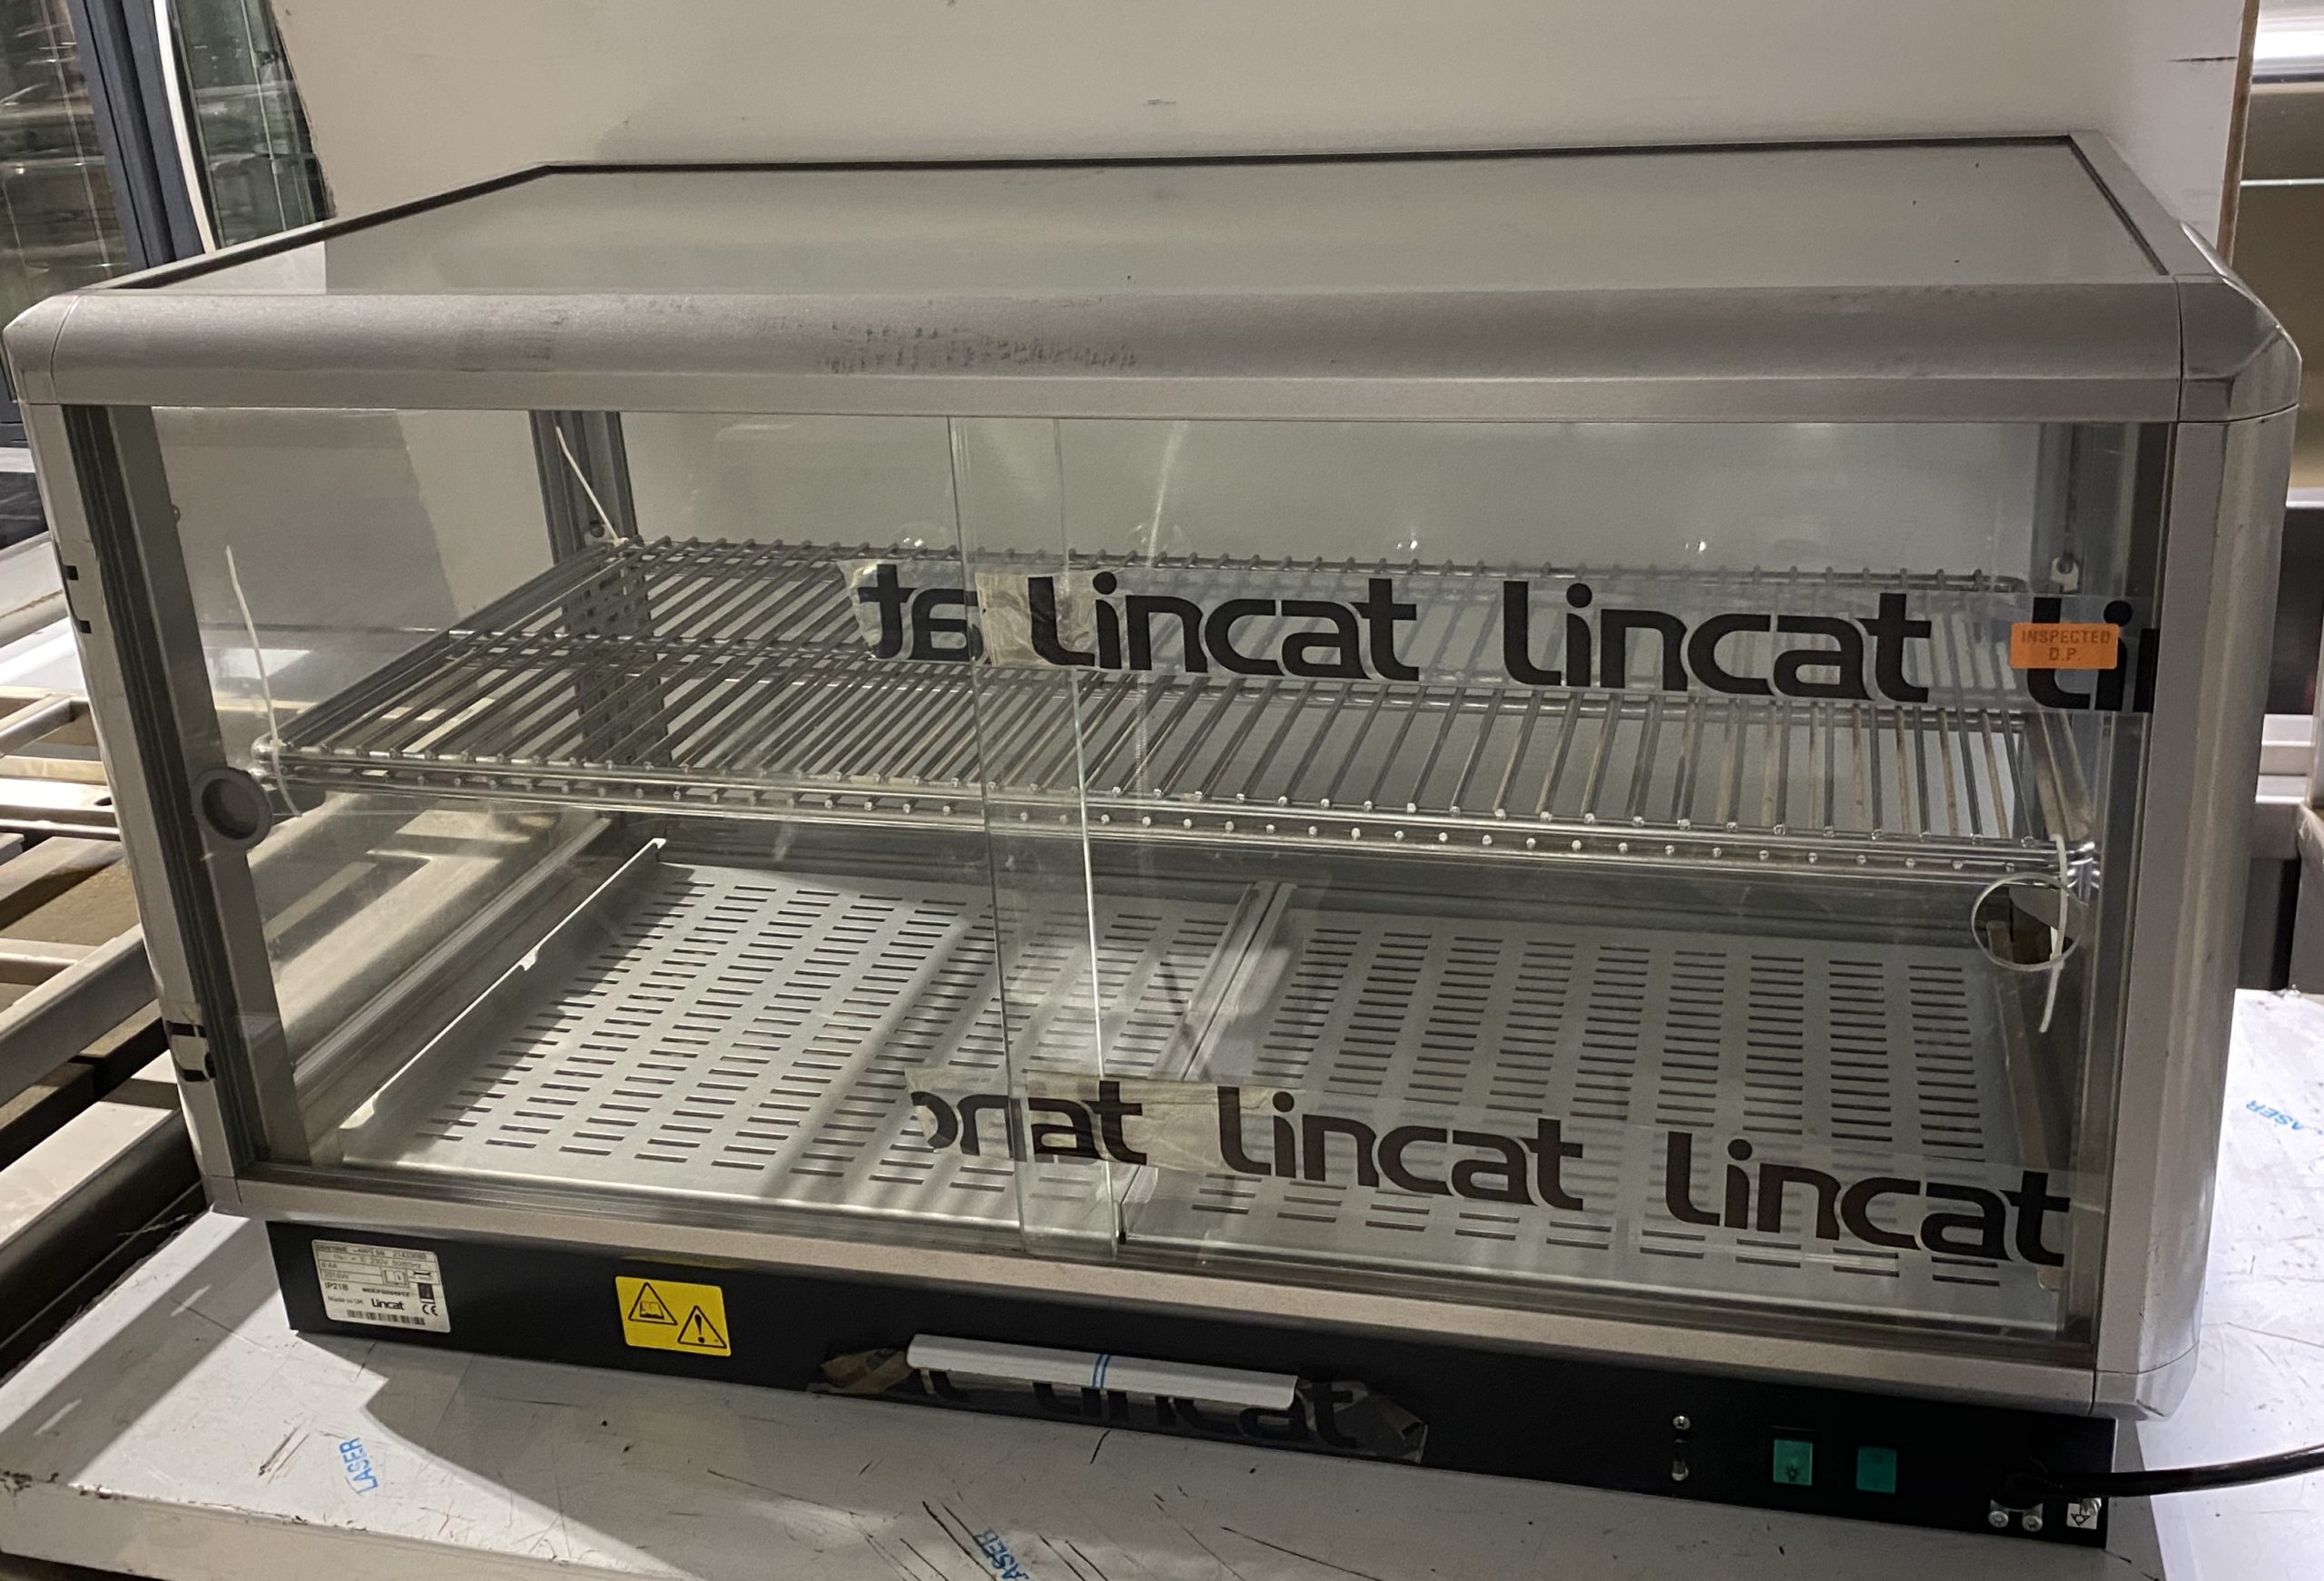 LINCAT D5H 100B Heated Counter Top DIsplay